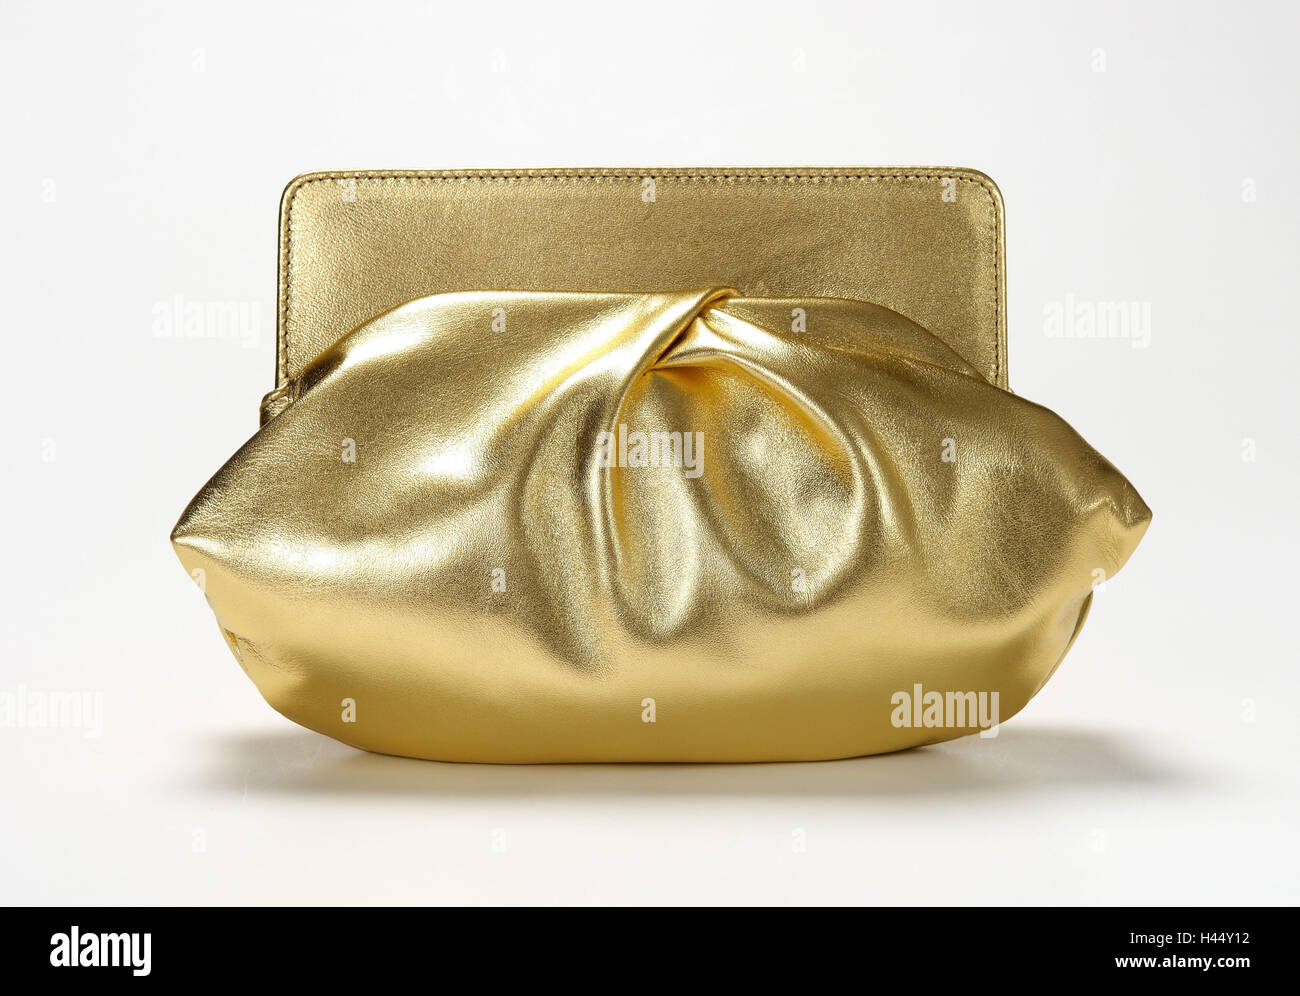 Gold clutch bag immagini e fotografie stock ad alta risoluzione - Alamy